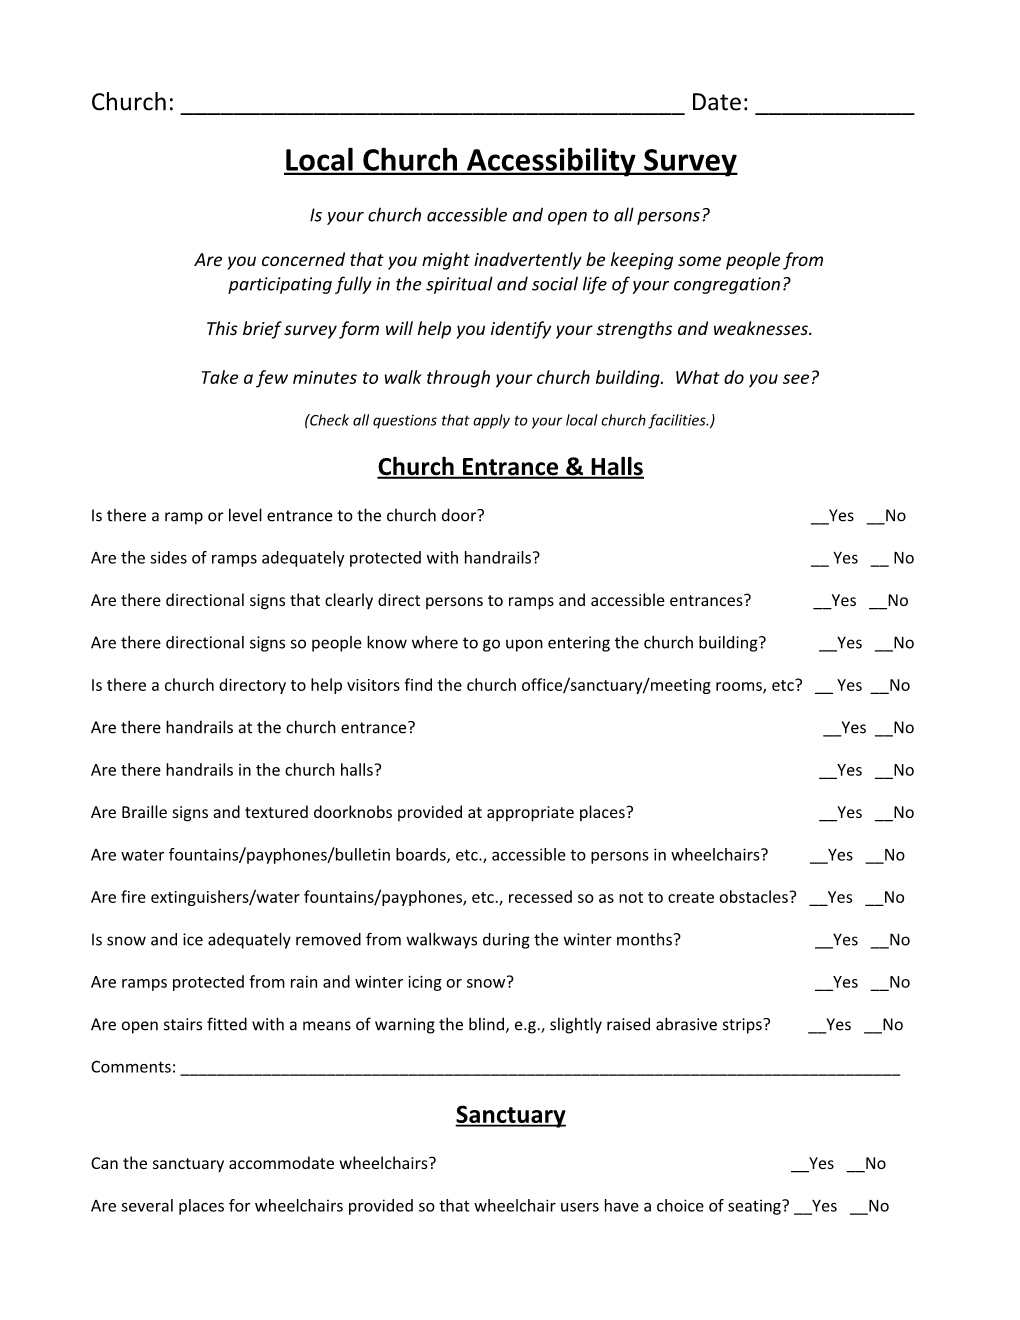 Local Church Accessibility Survey